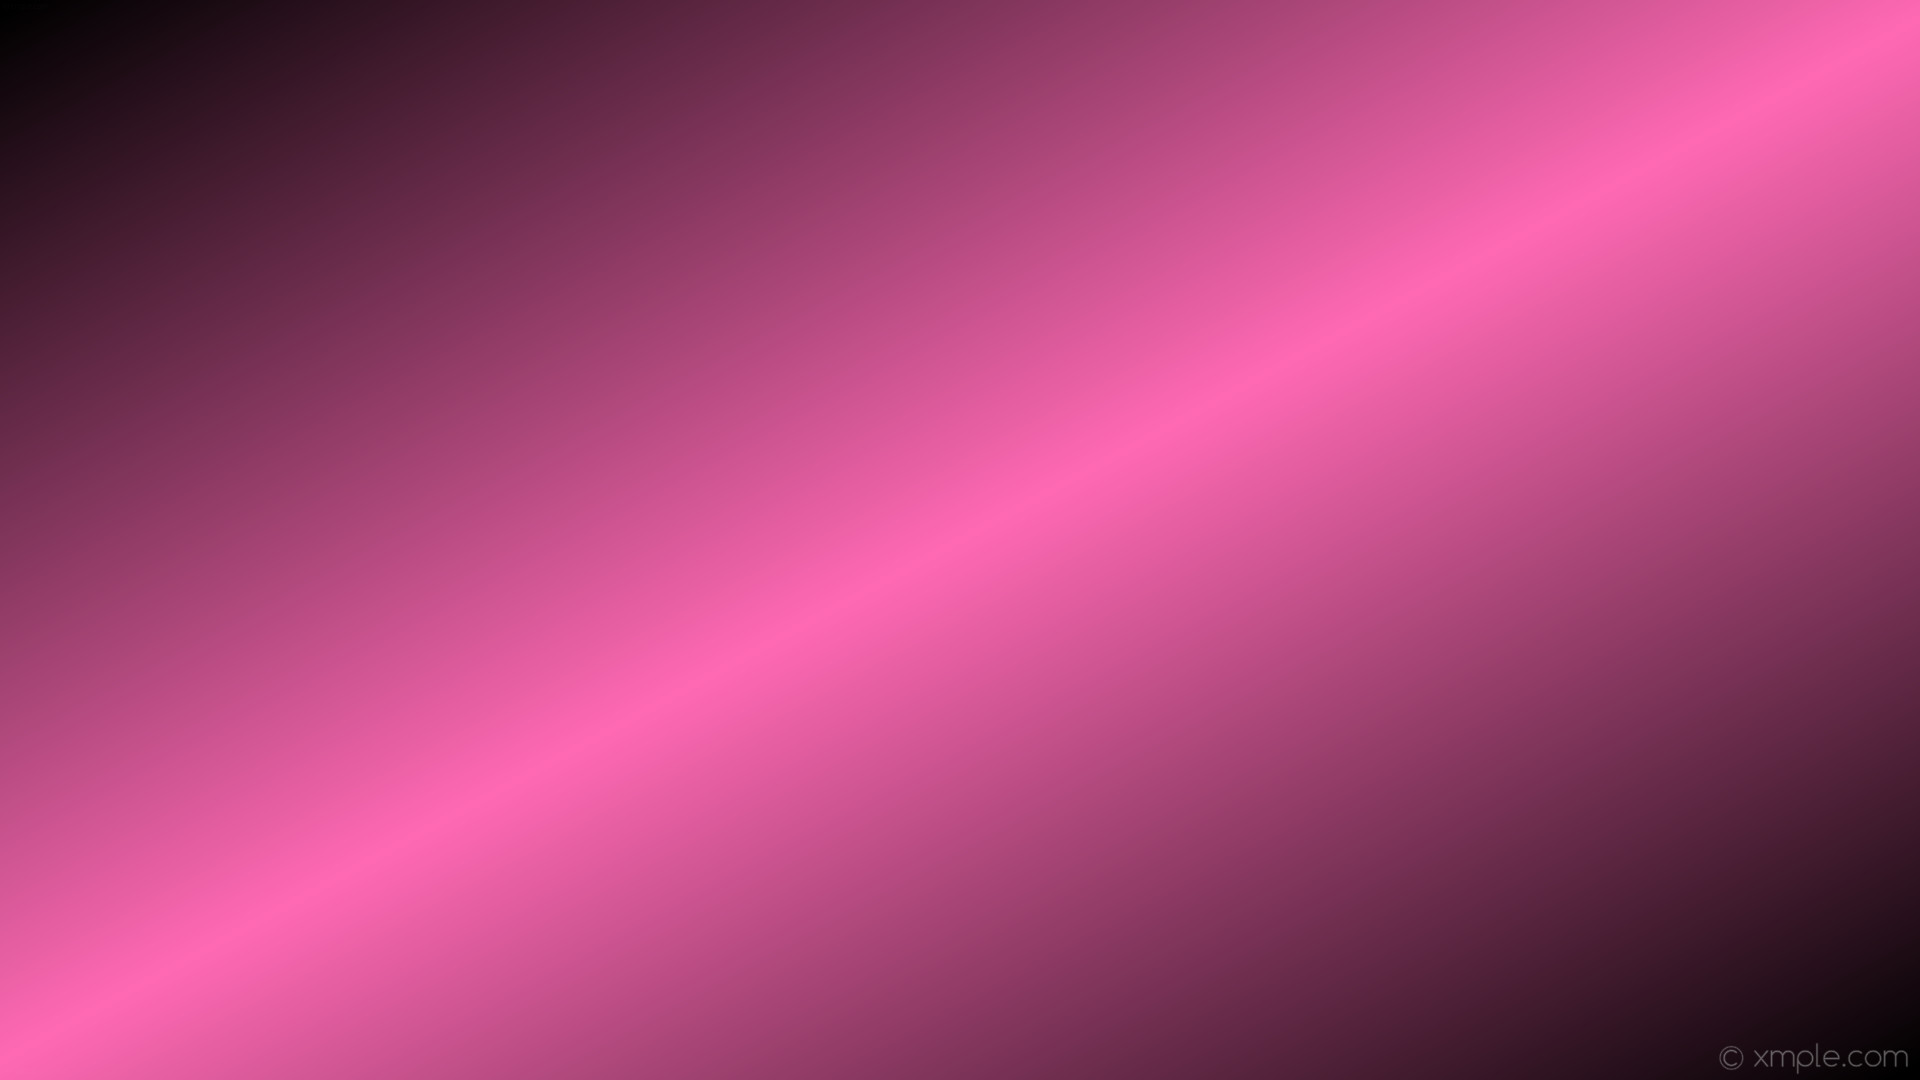 1920x1080 wallpaper linear pink black gradient highlight hot pink #000000 #ff69b4  150Â° 50%